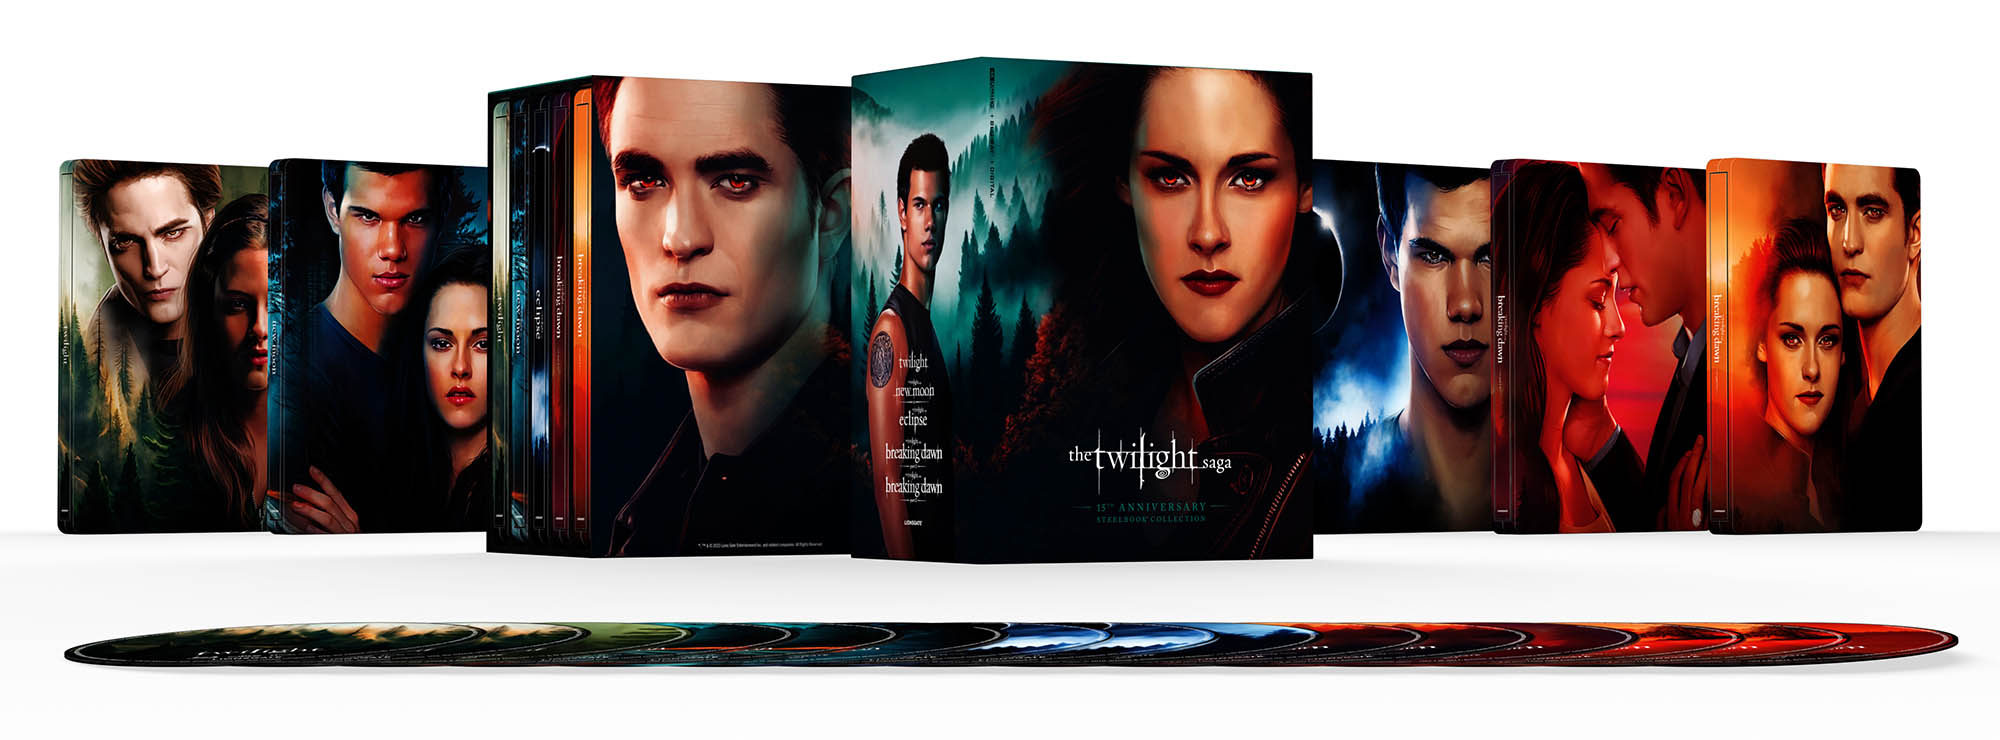 The Twilight Saga 15th Anniversary Limited Edition SteelBook